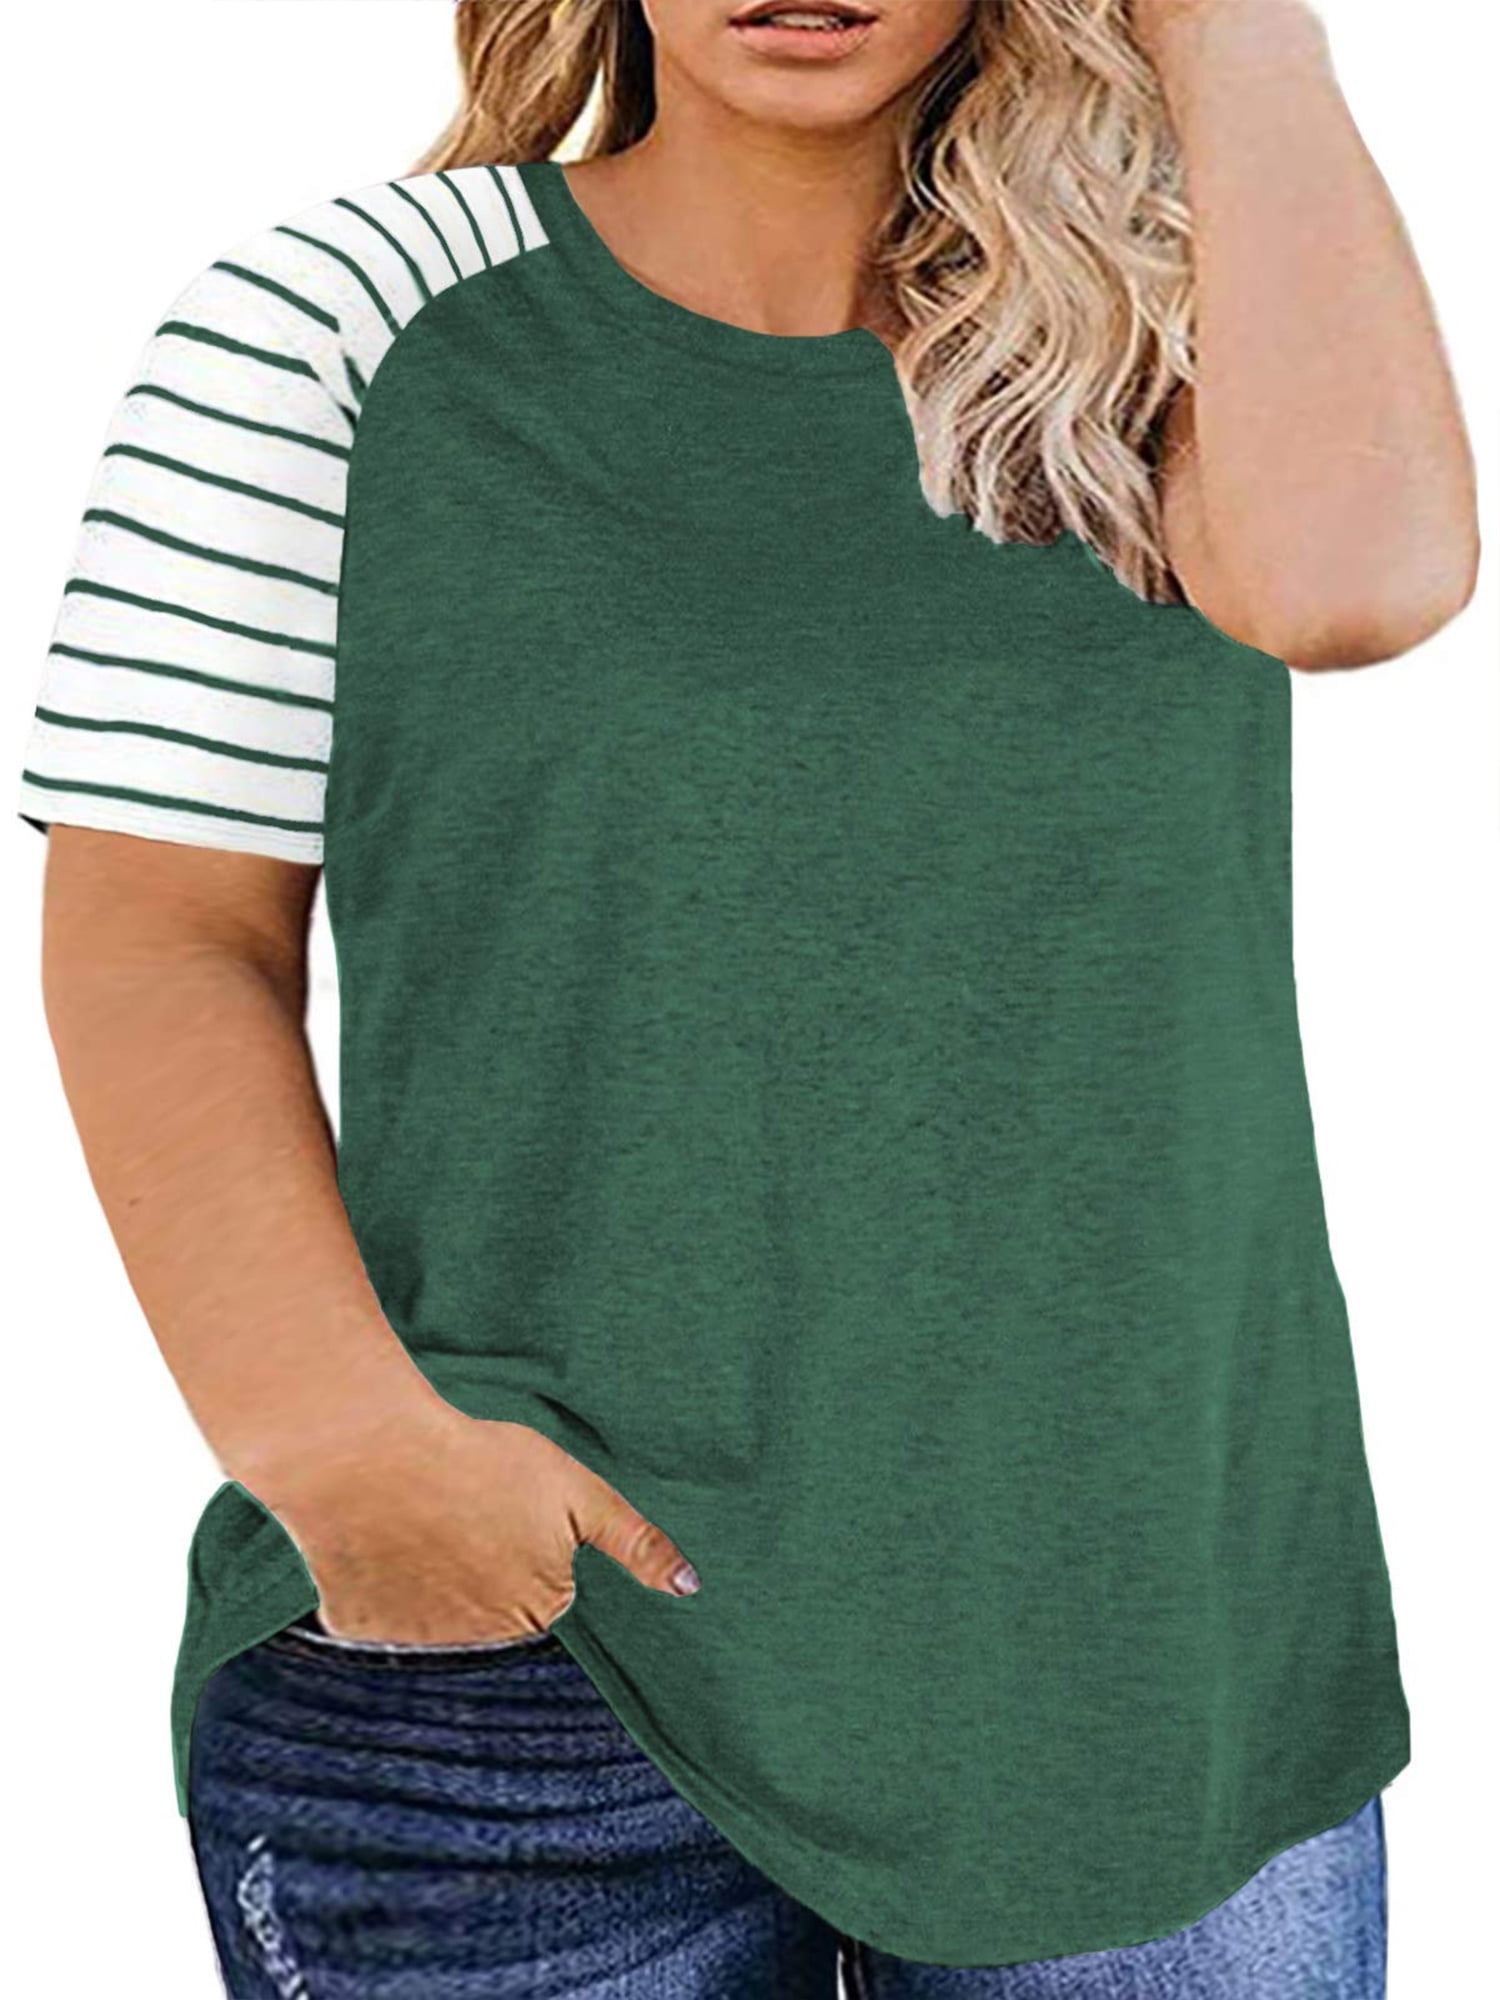 TIMEMEANS Classic Blouse for Women Plus Size Short Sleeves V-Neck Print Tops Shirt